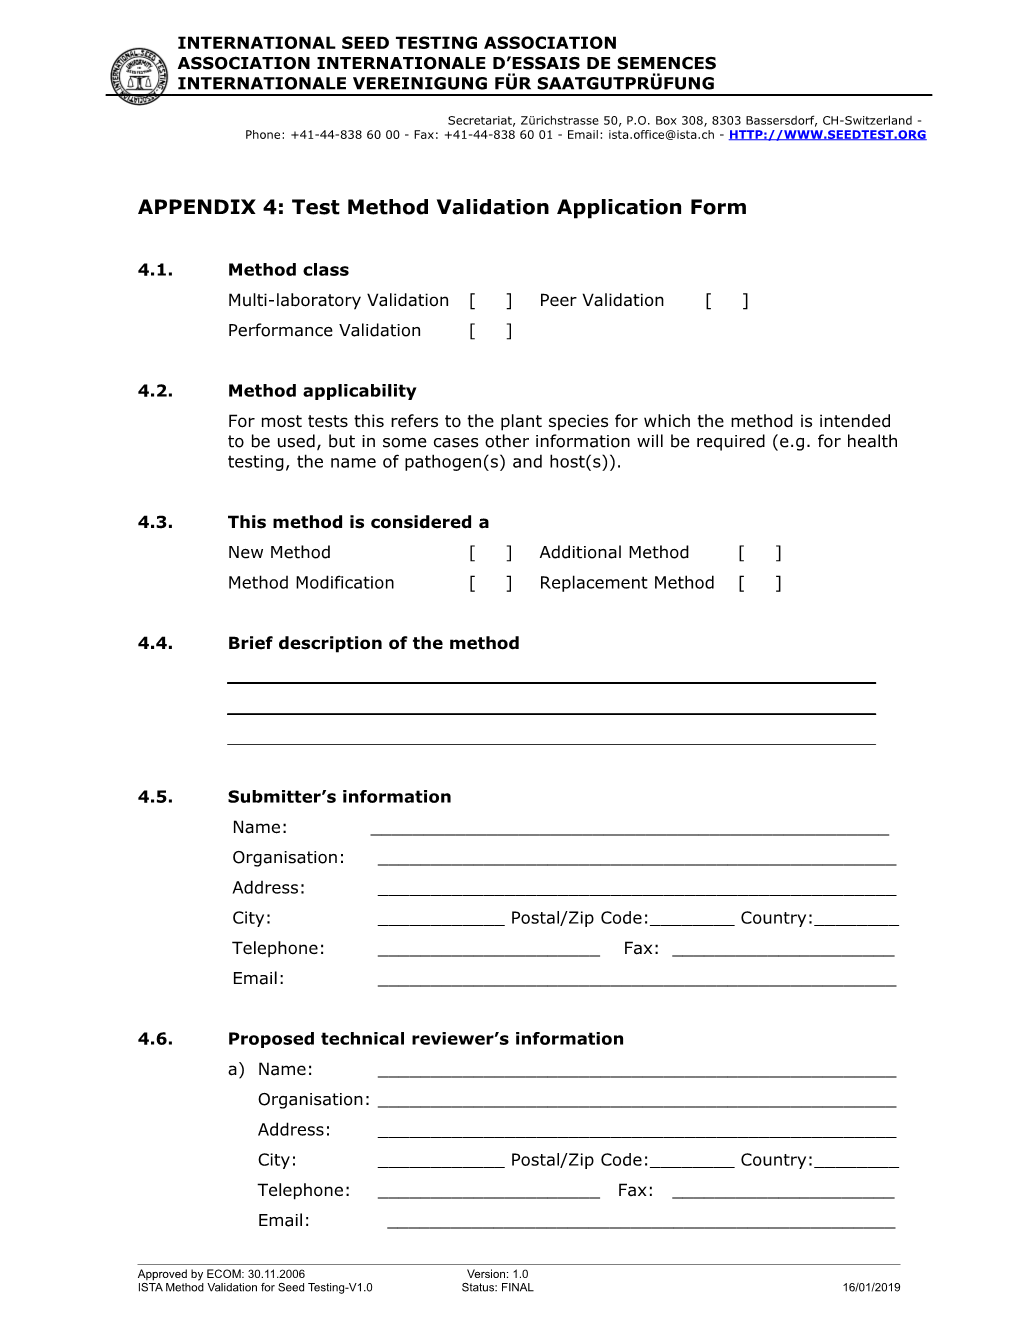 APPENDIX 4: Test Method Validation Application Form